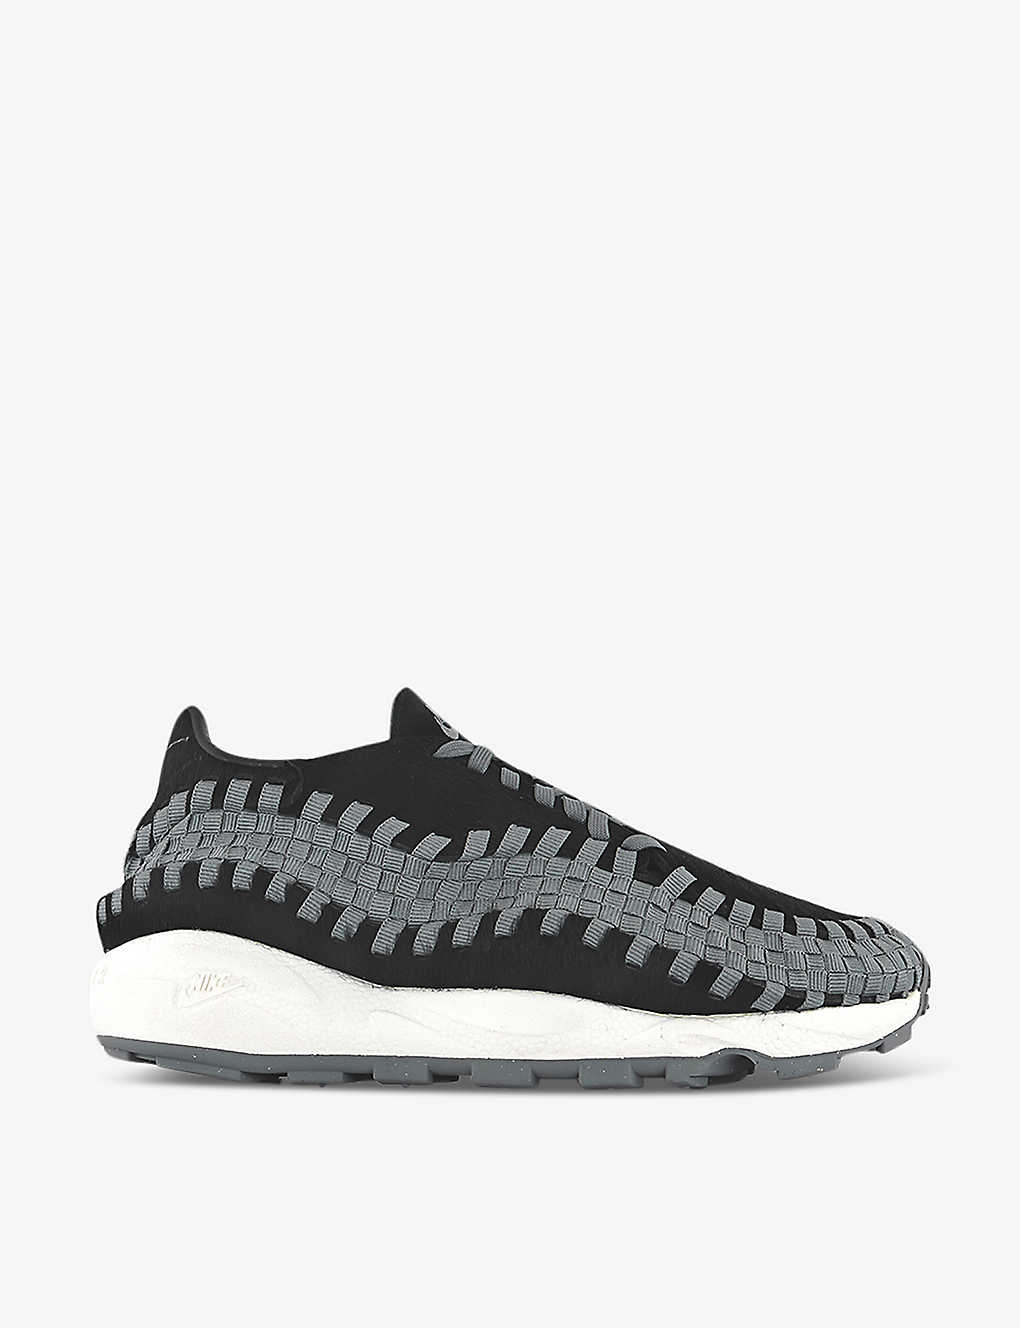 Nike Air Footscape Woven "black Smoke/grey" Sneakers In Black/smoke Grey-sail